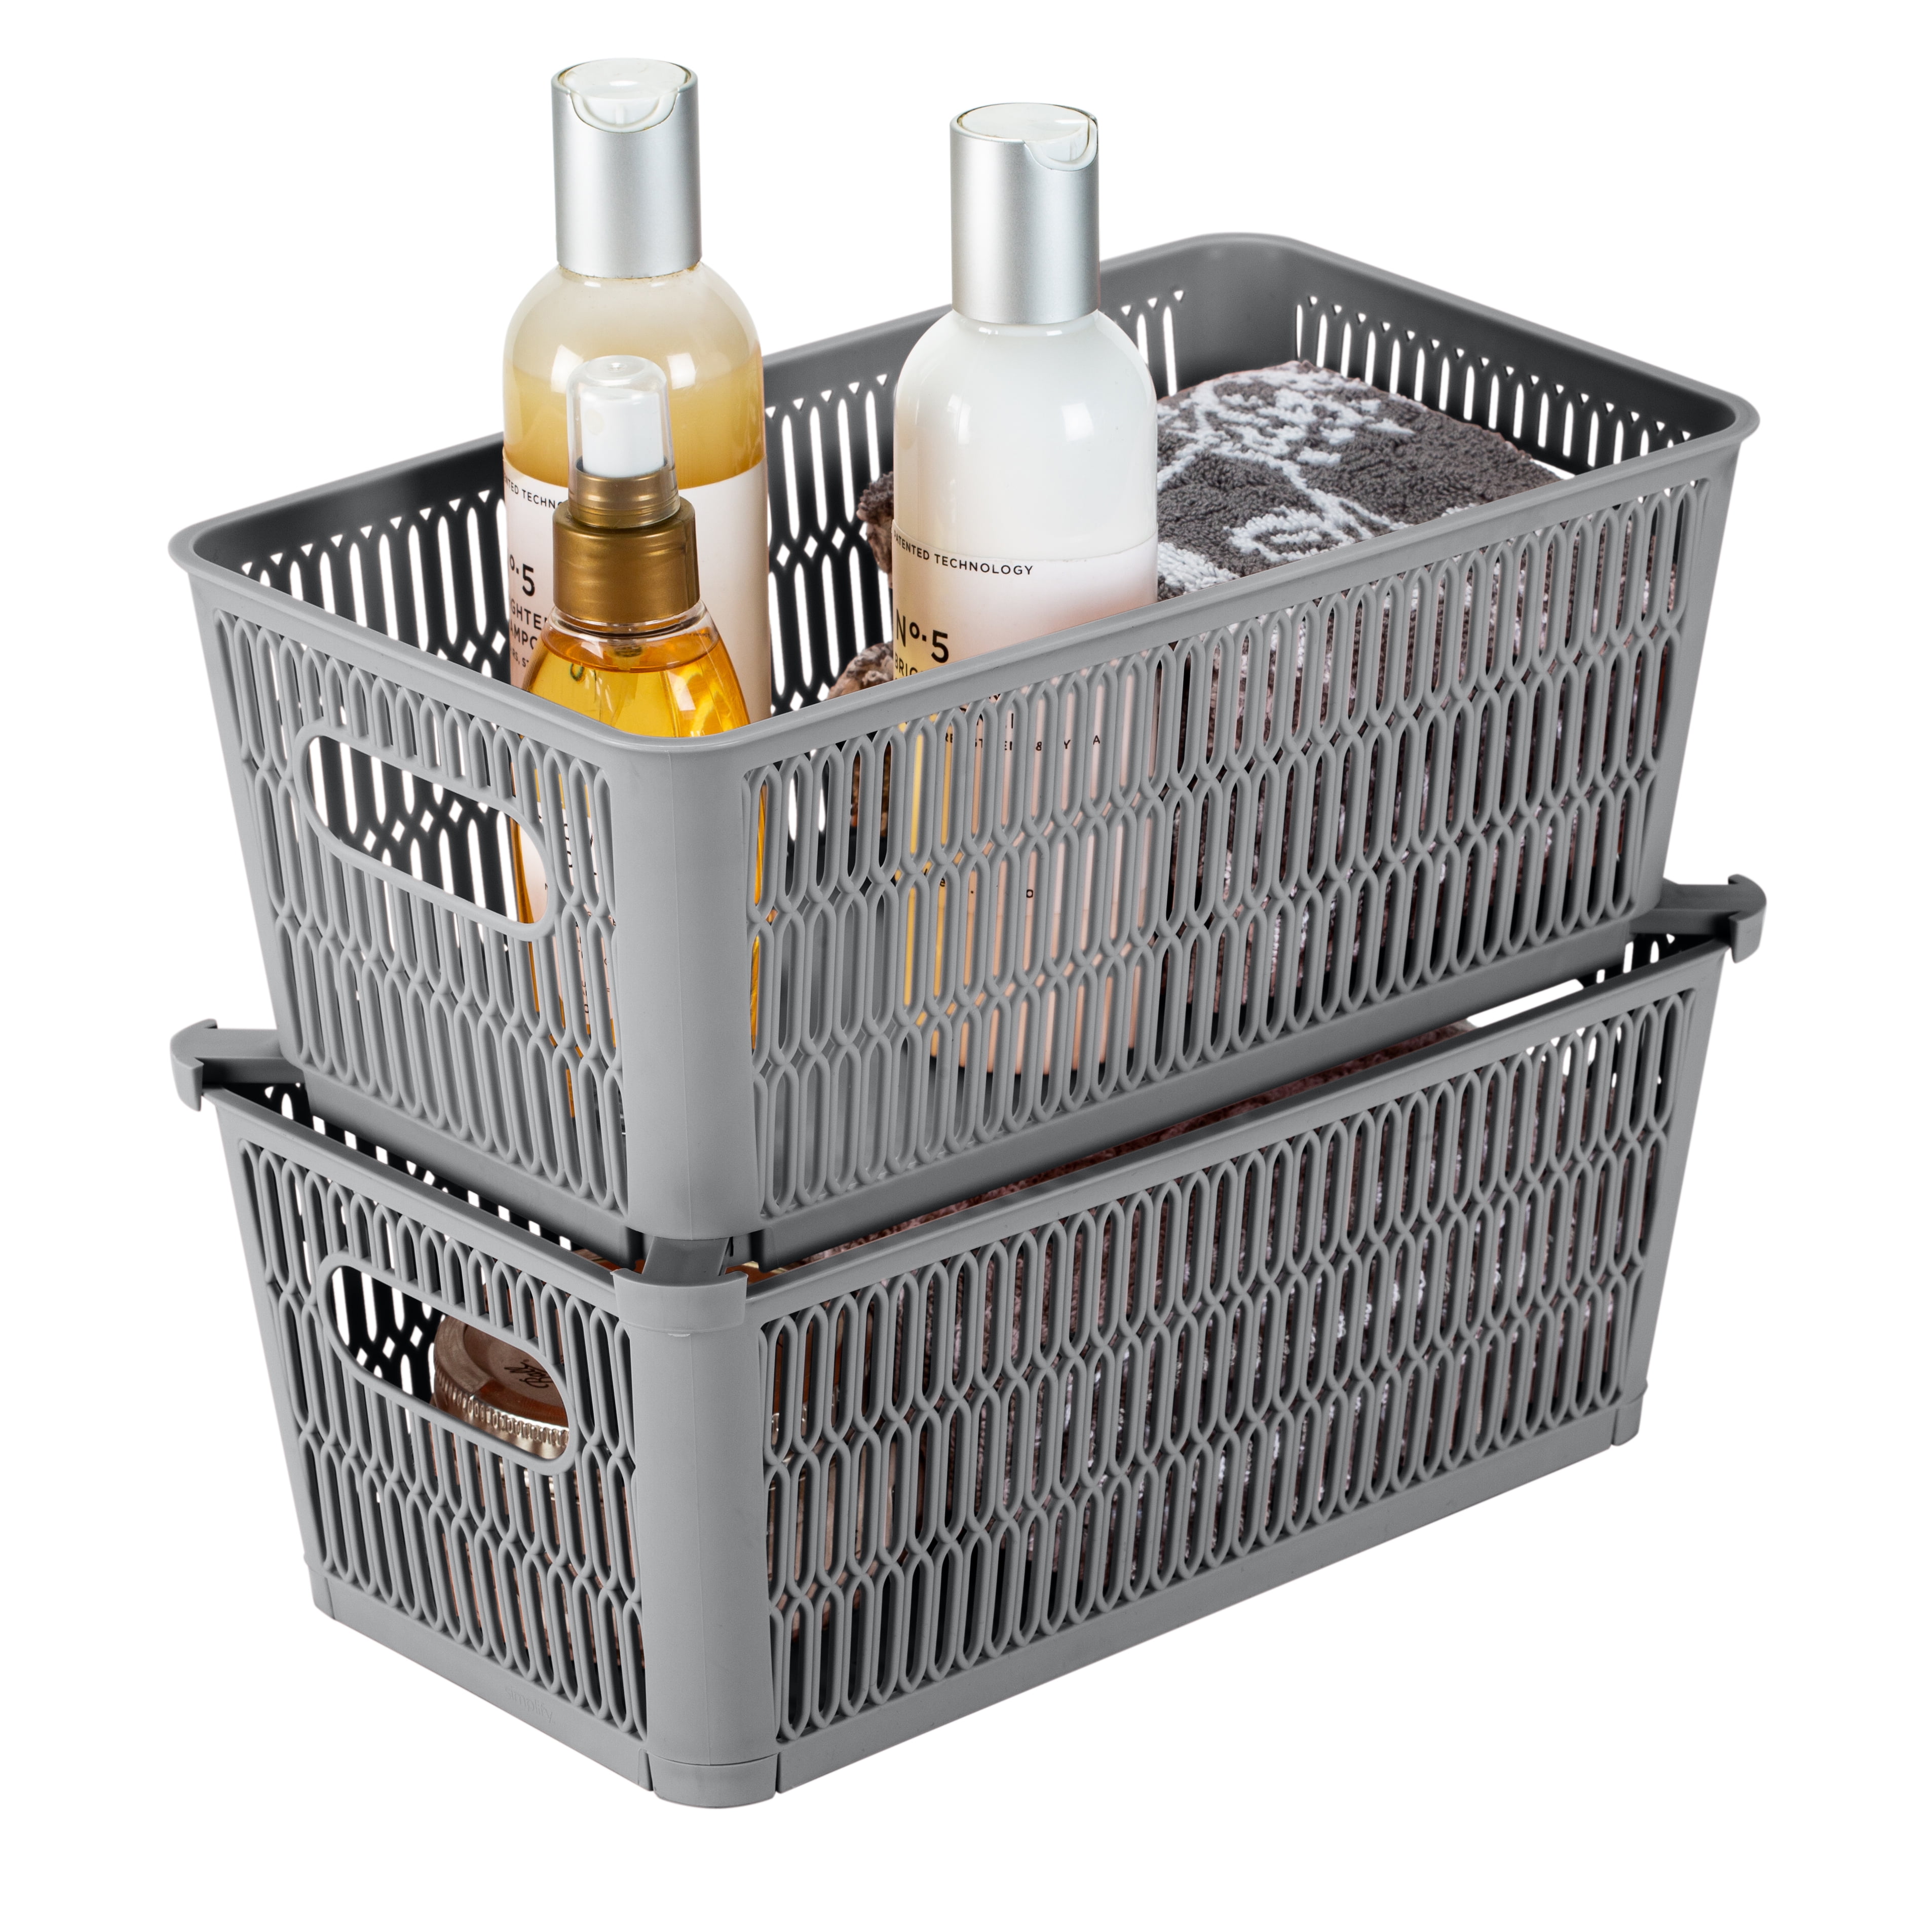  JiatuA Plastic Storage Basket with Handle Portable